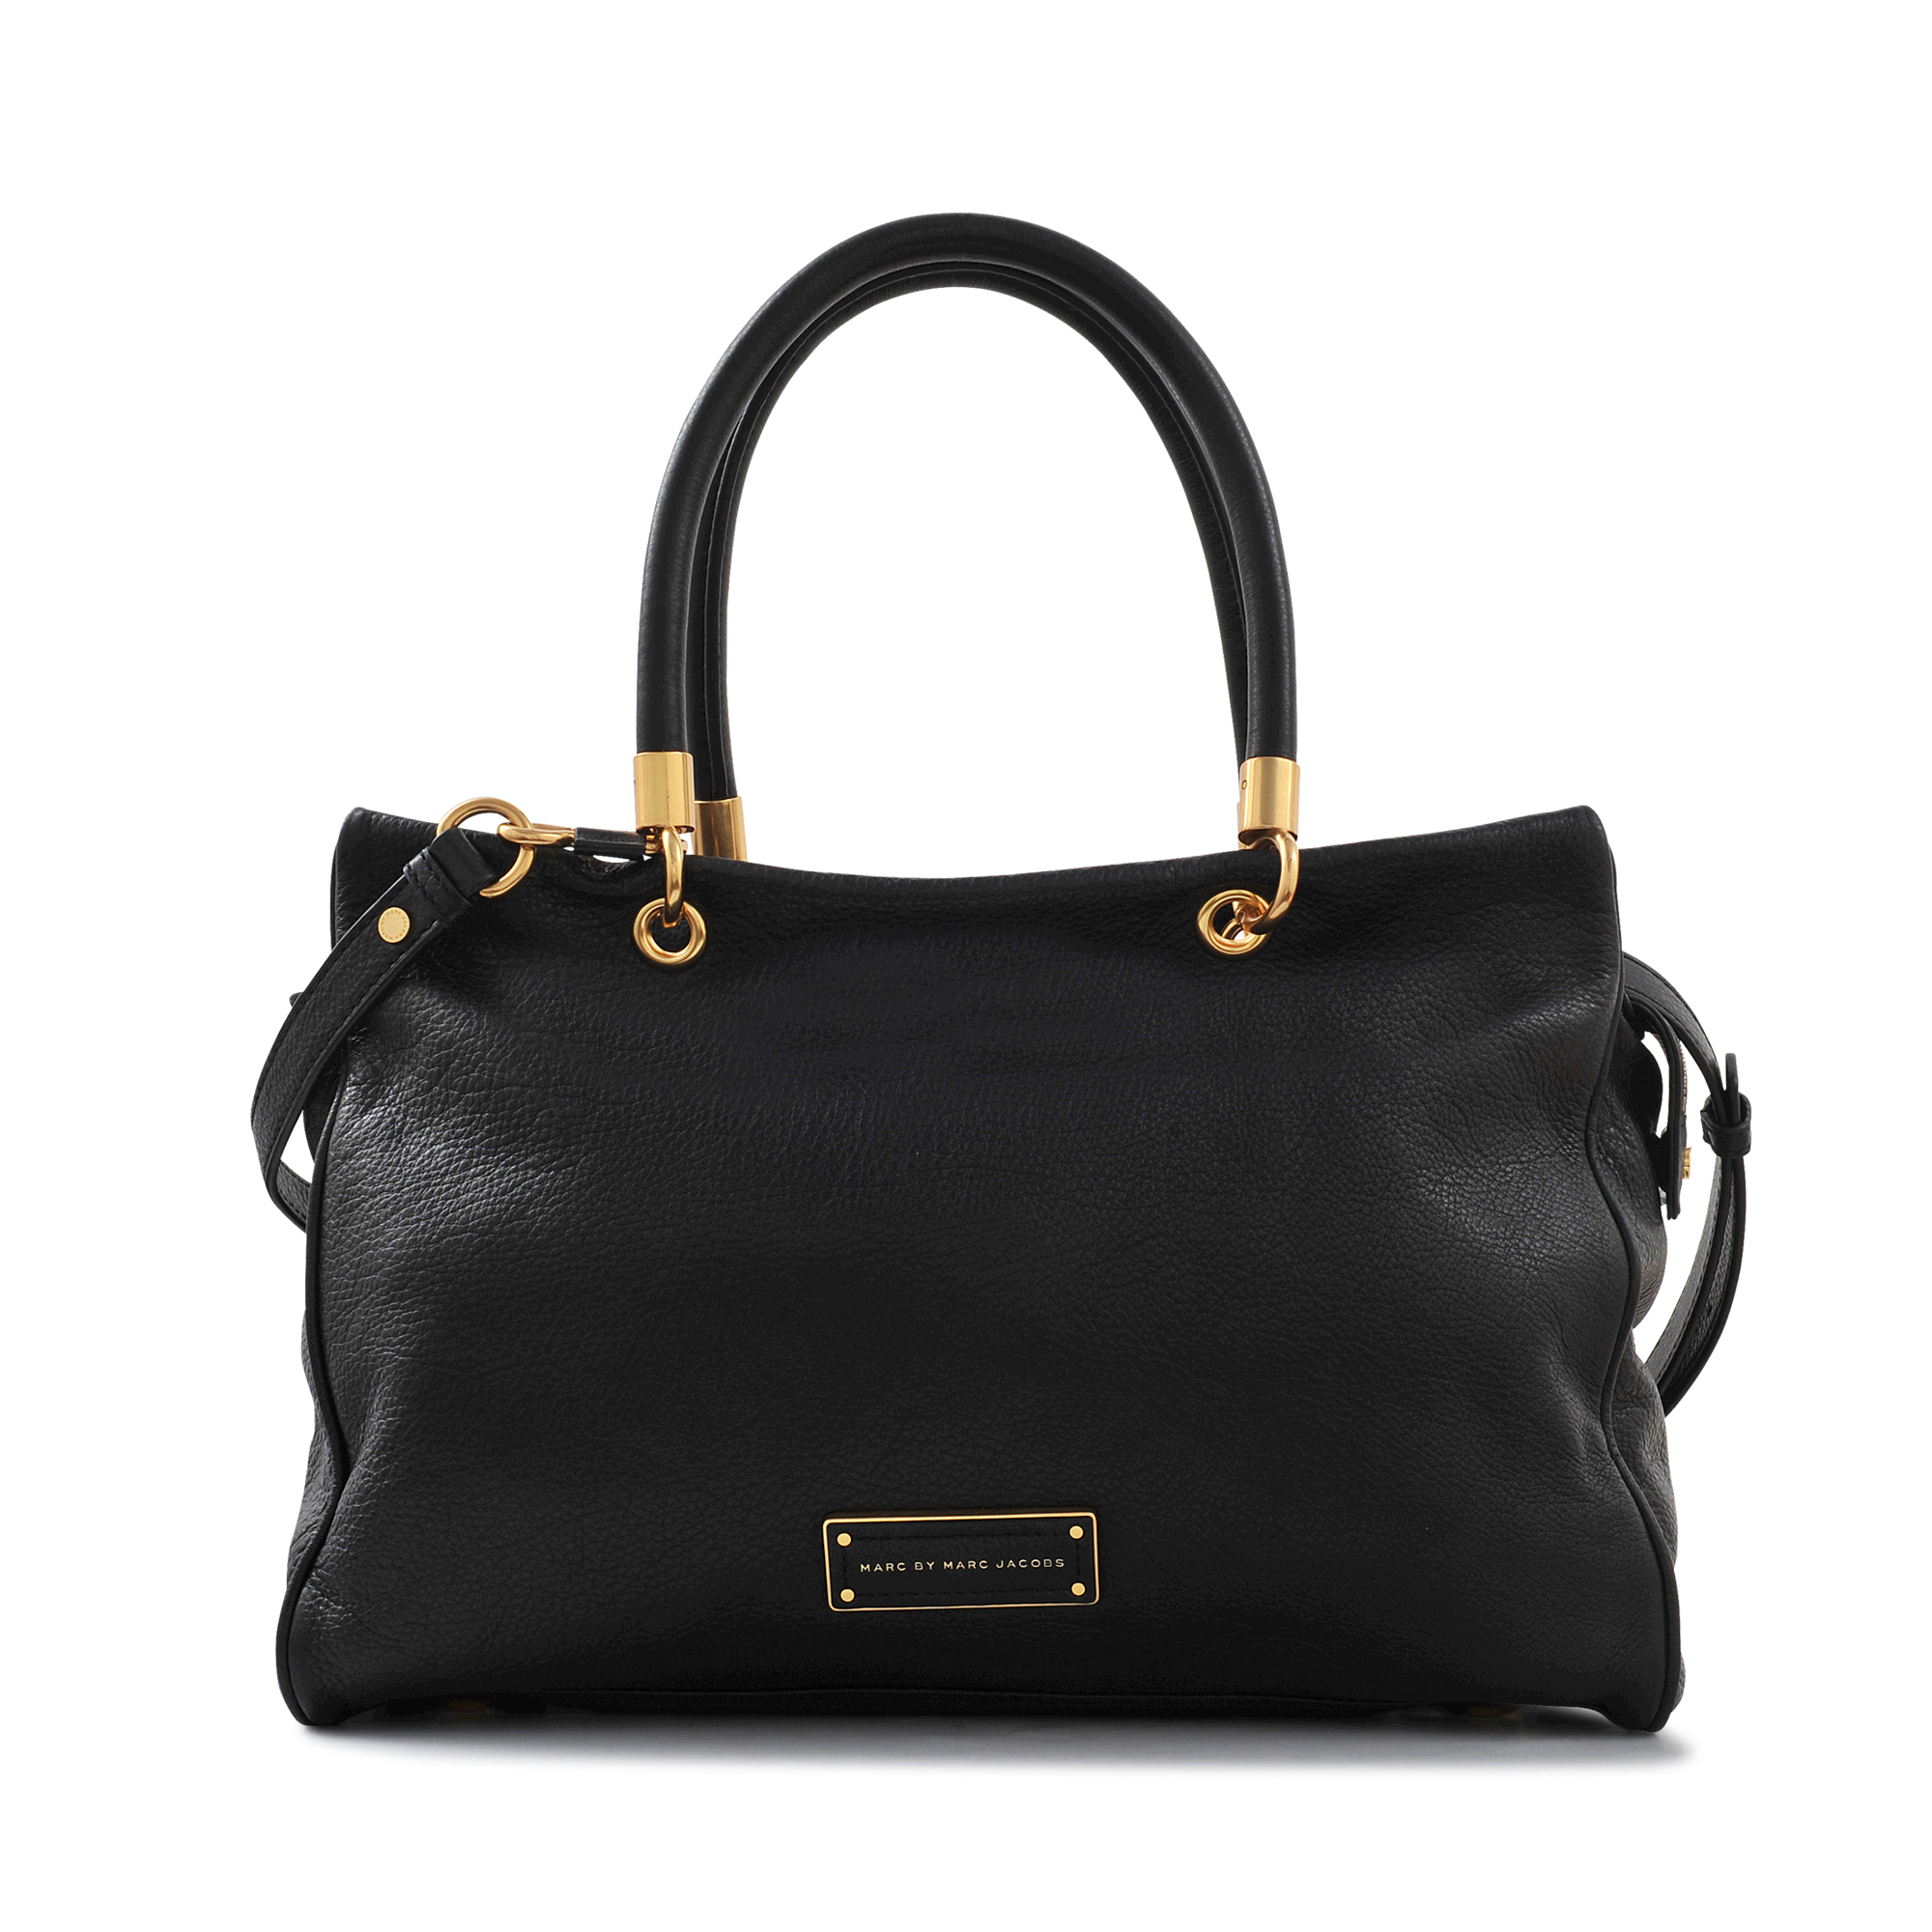 Marc Jacobs bags. Marc Jacobs Women's Mini Traveler Tote, Black, One Size.